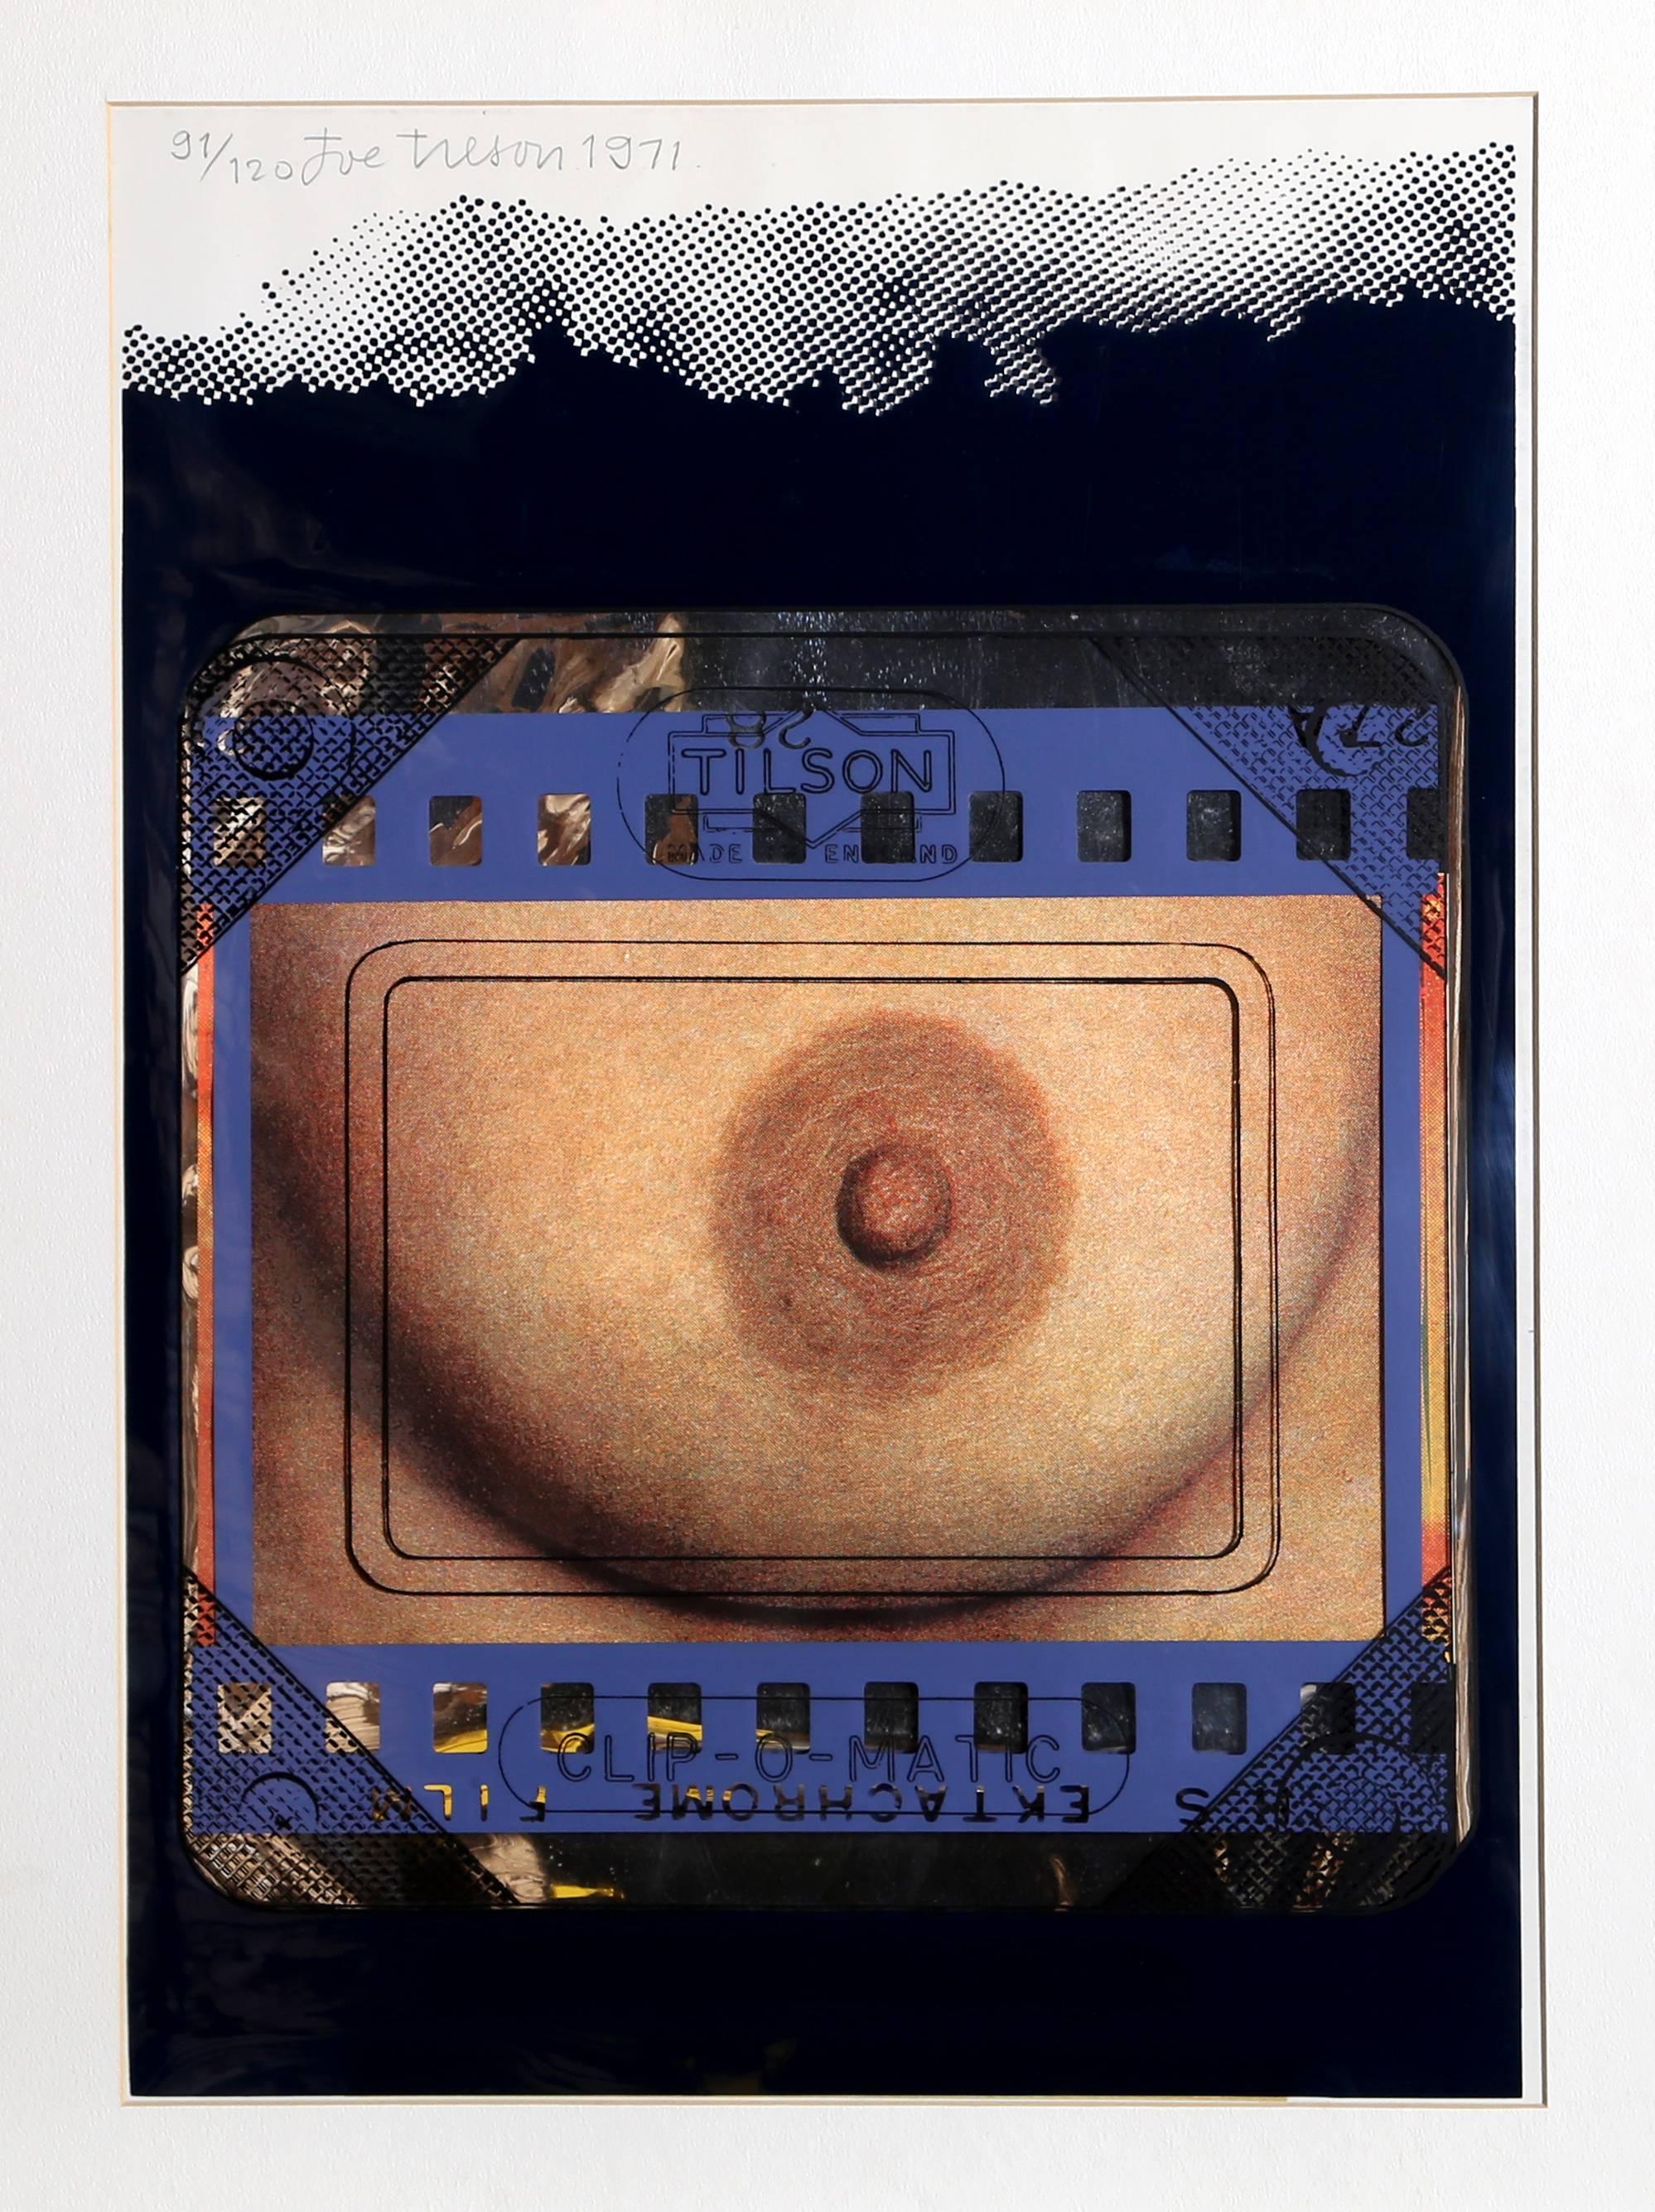 Joe Tilson Nude Print - Clip-o-Matic